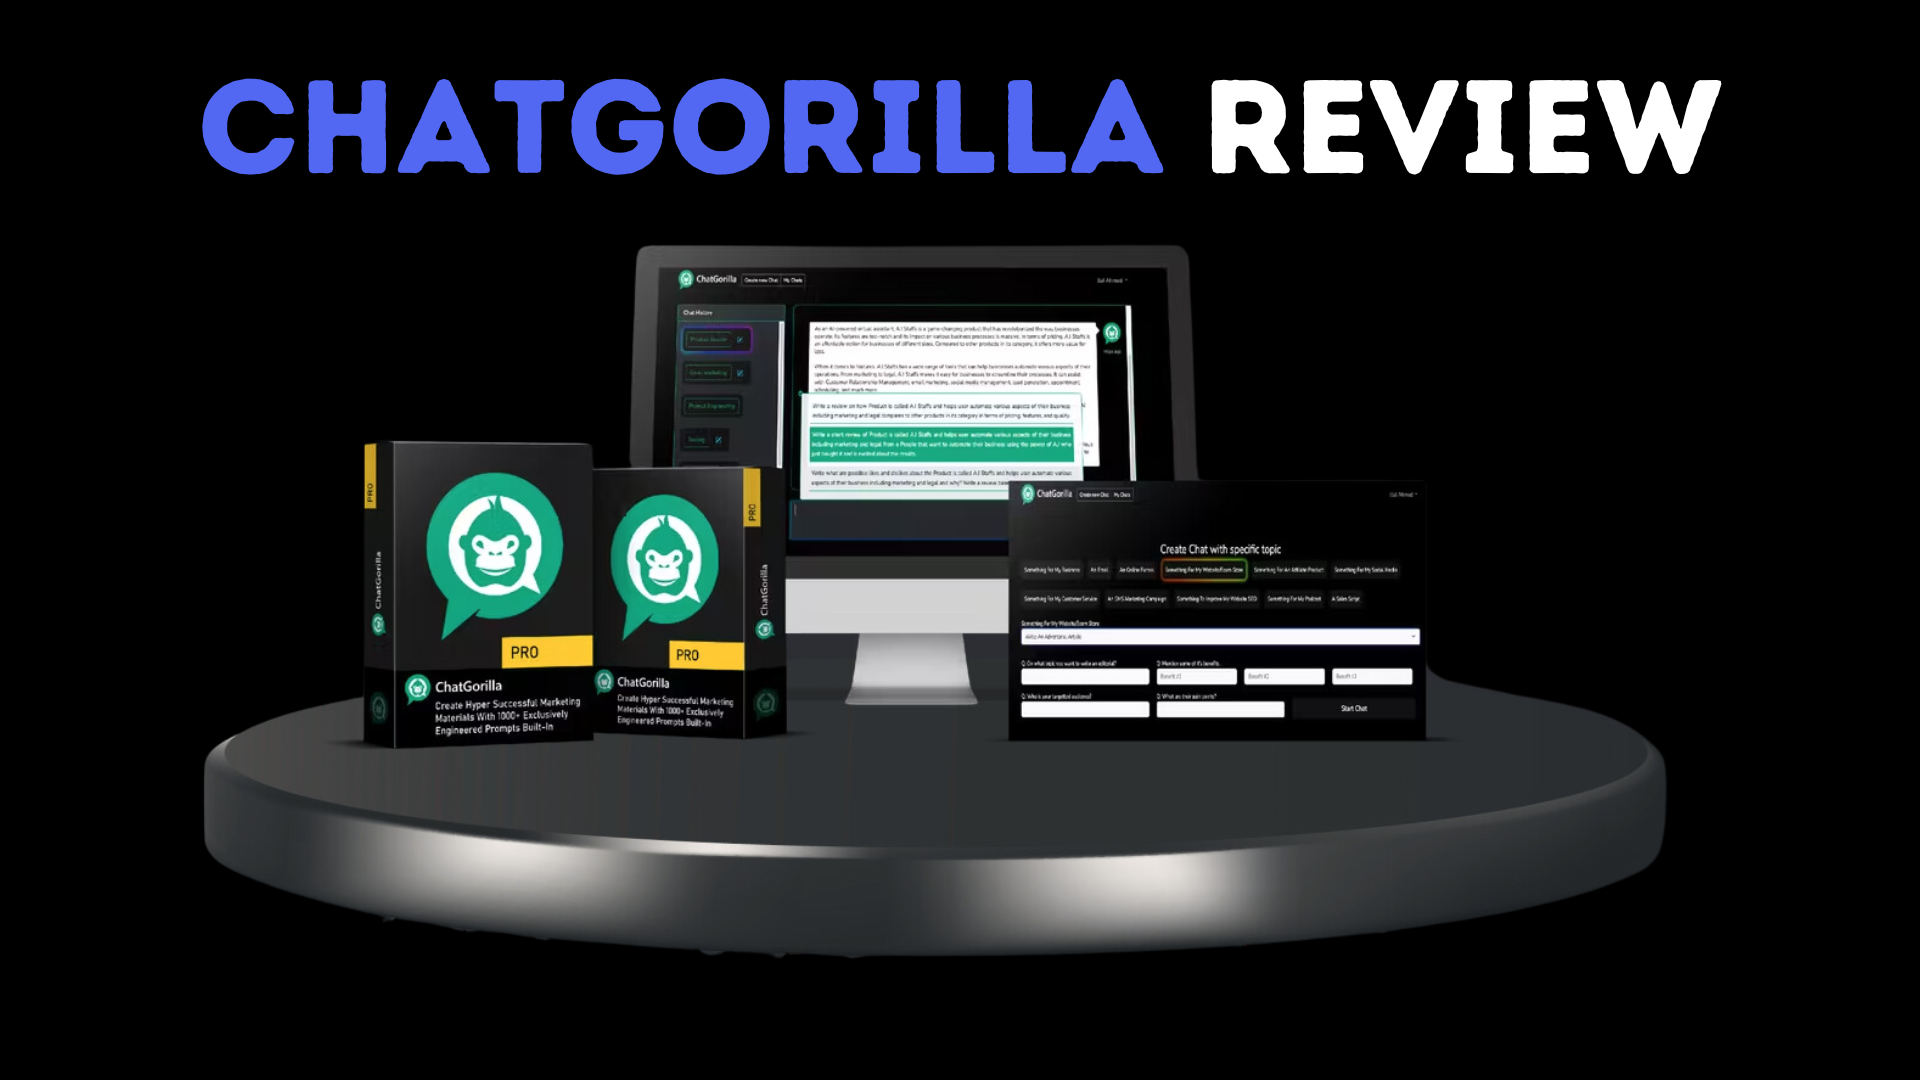 Chatgorilla Review